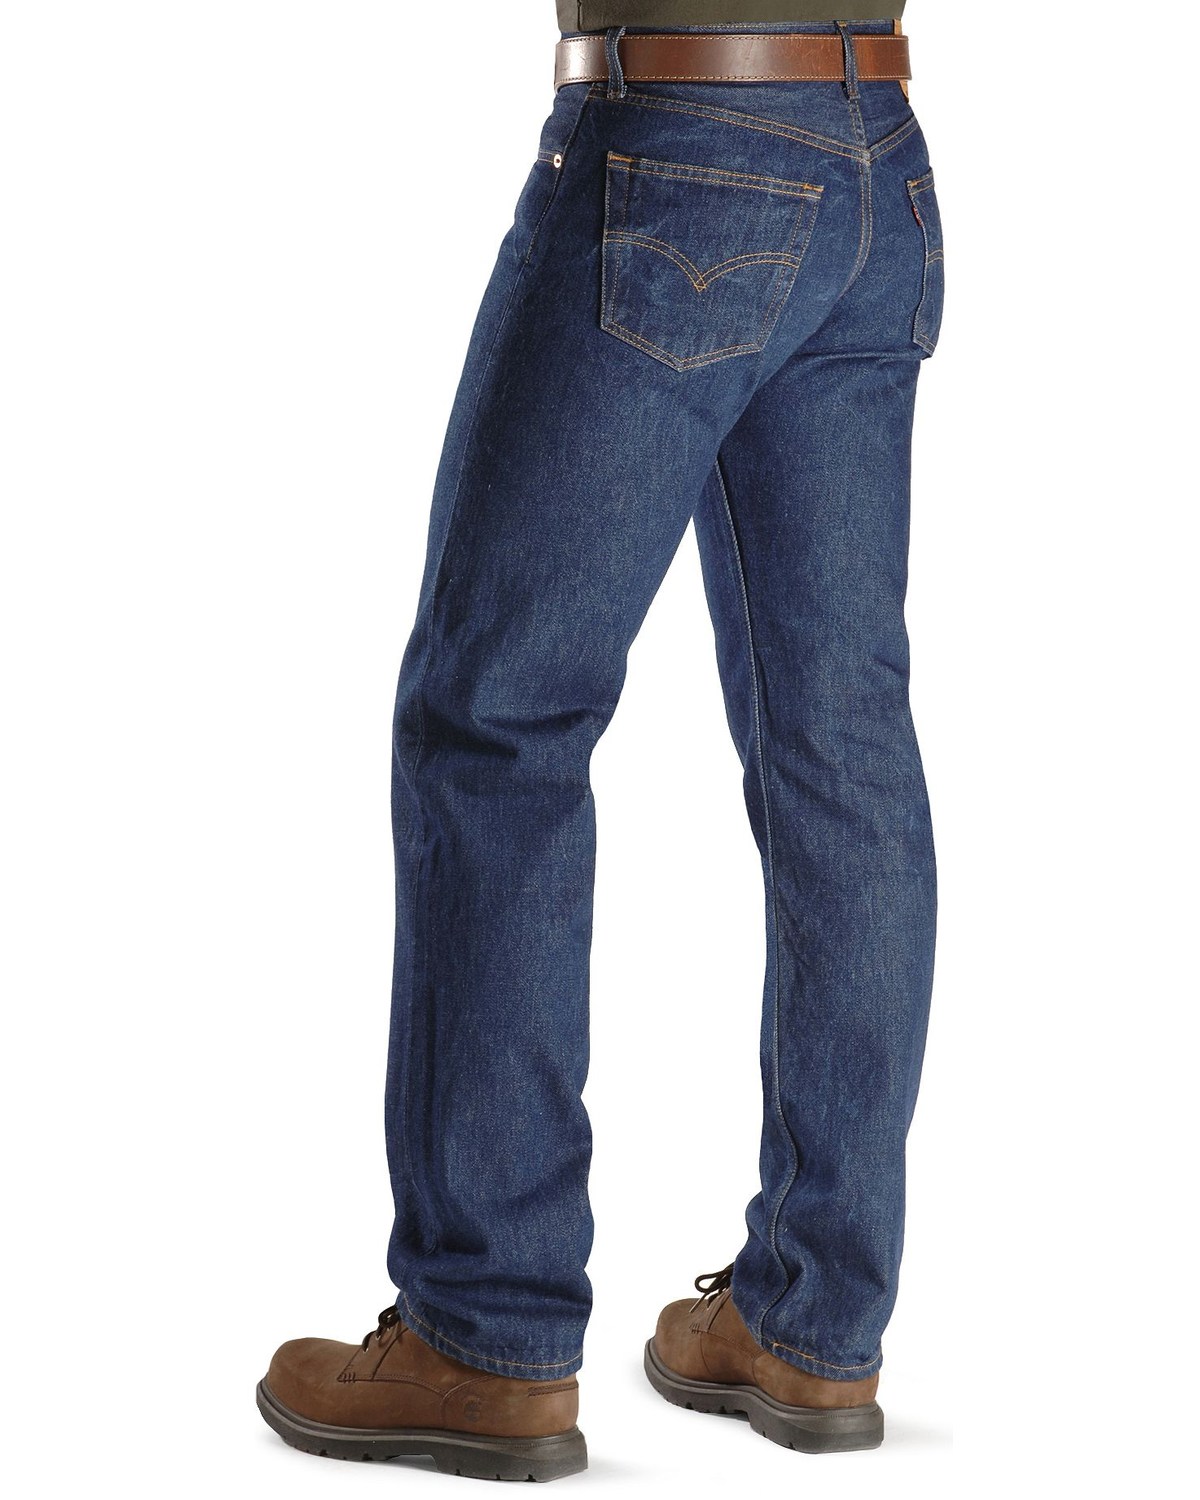 Levi's Men's 501 Original Shrink-to-Fit Regular Straight Leg Jeans - Big